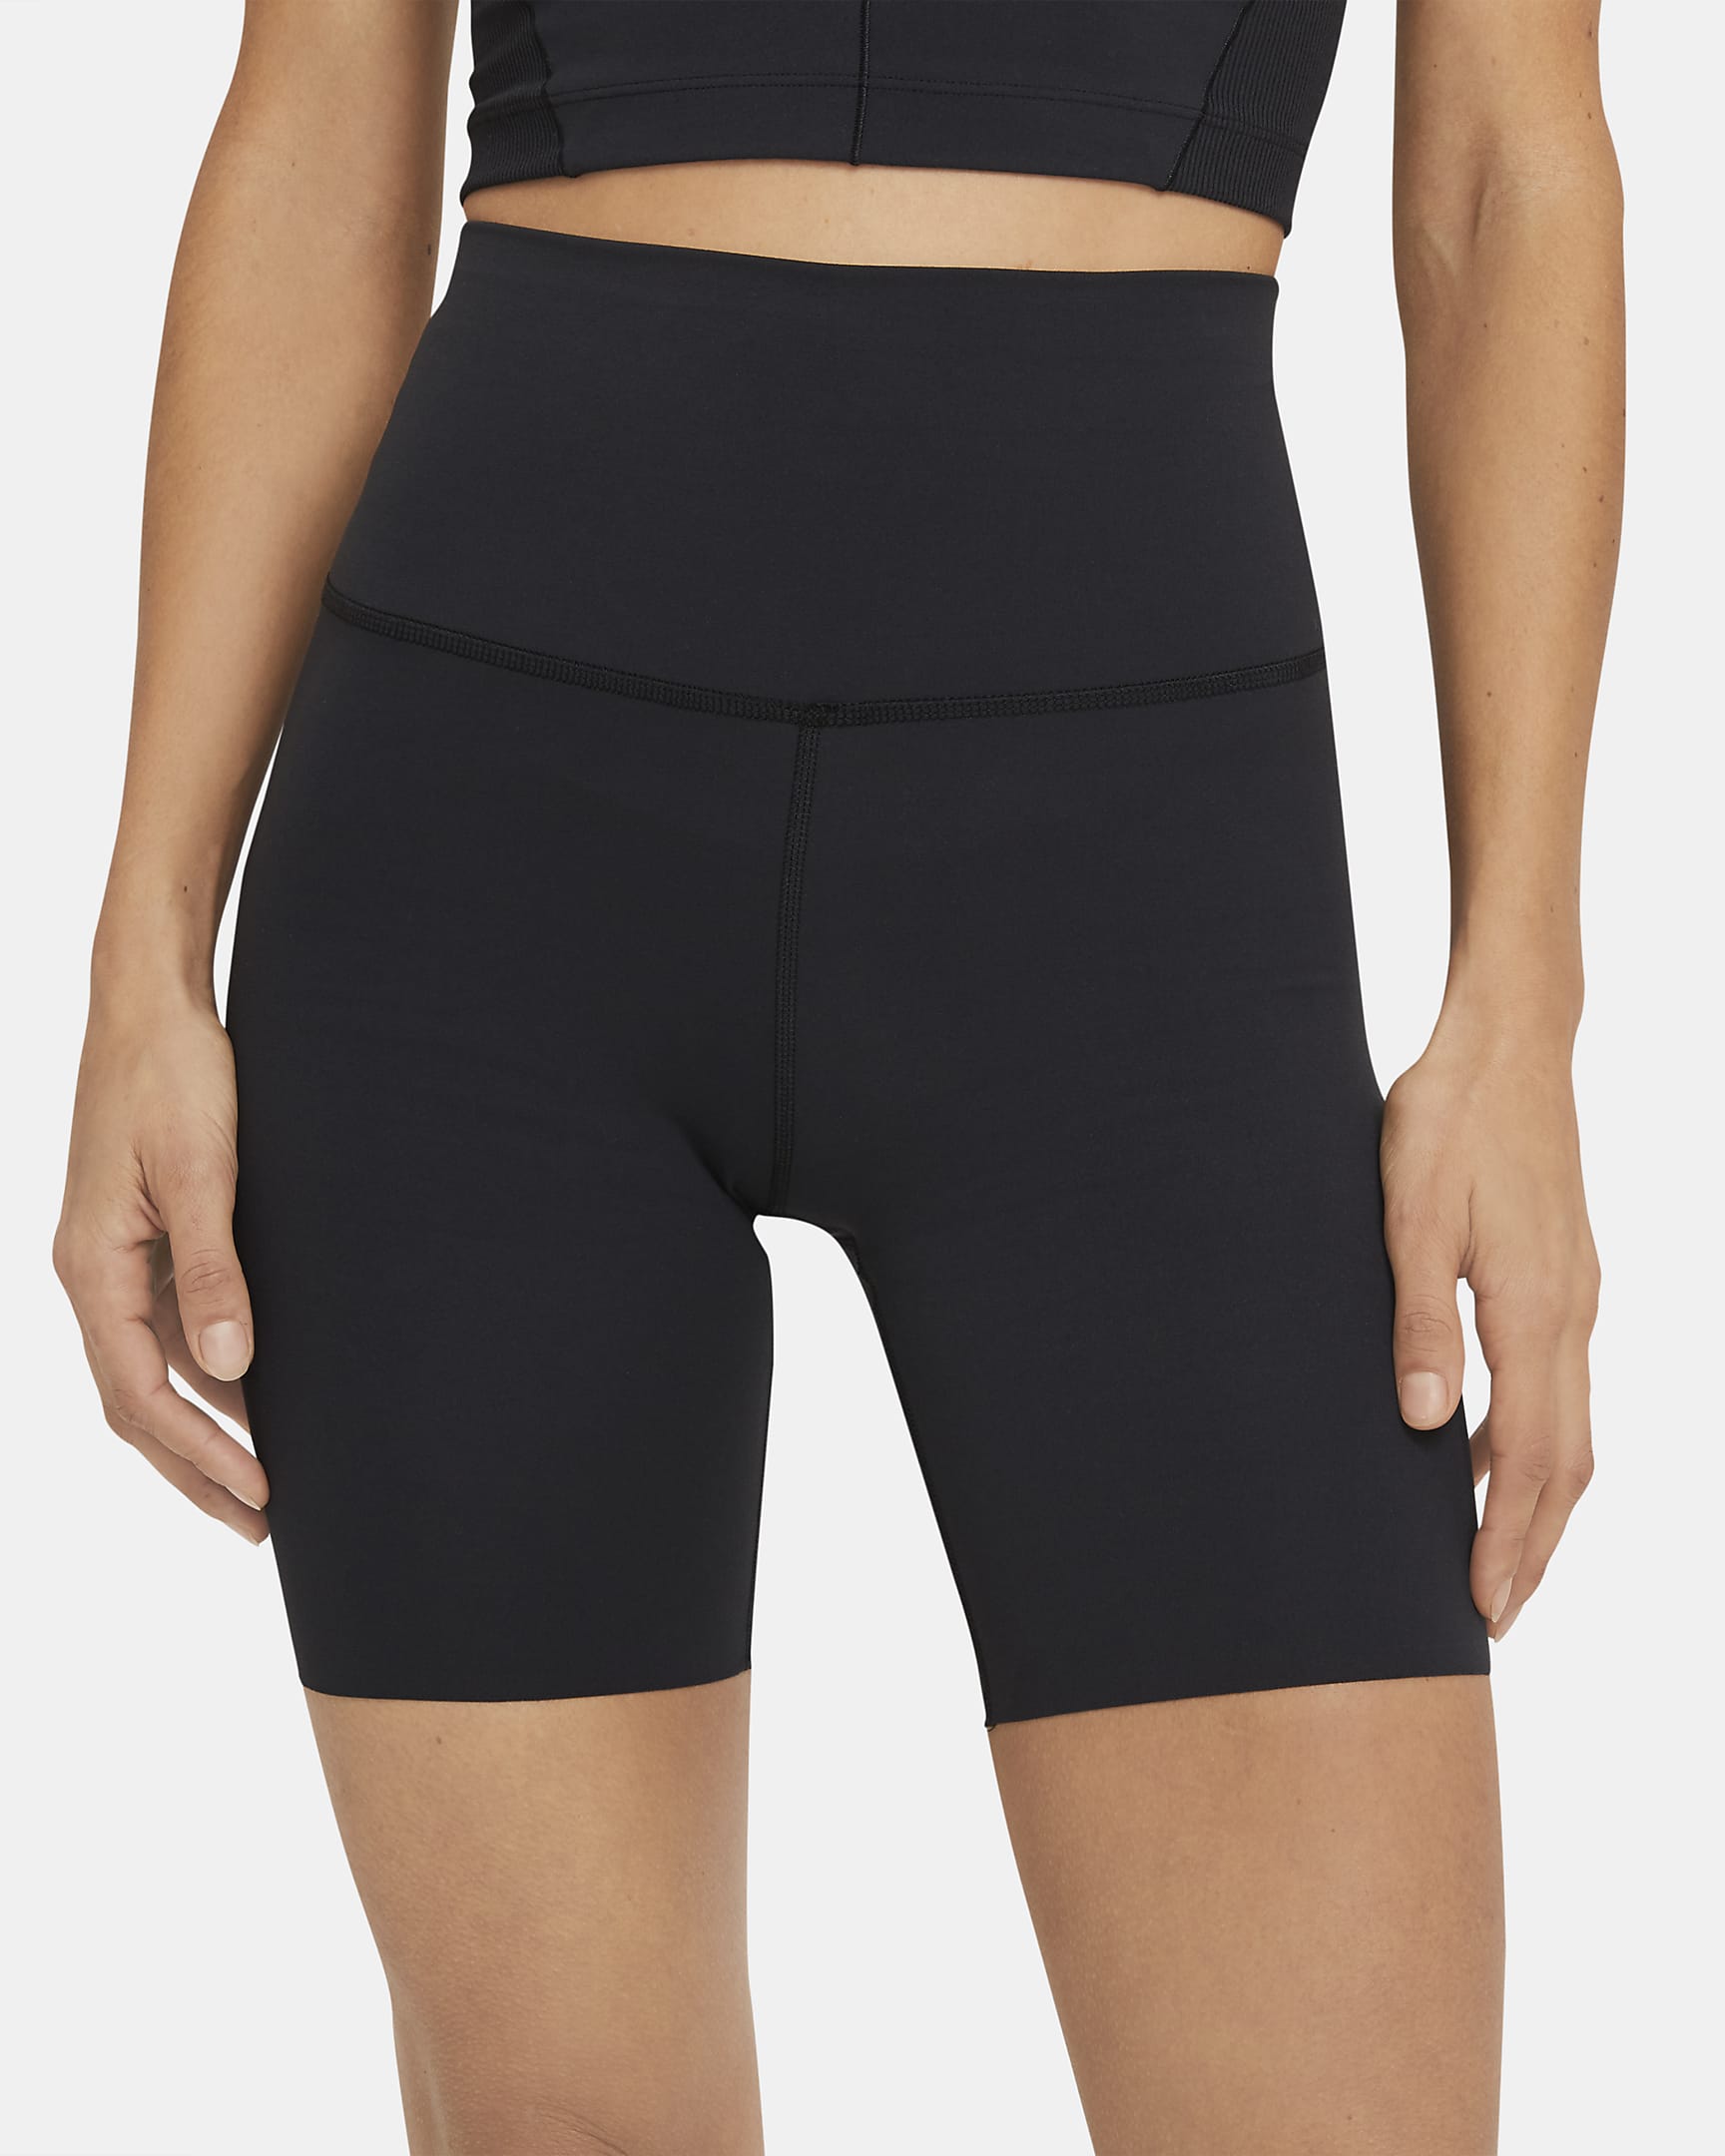 Nike Yoga Luxe Women's High-Waisted Shorts. Nike HR